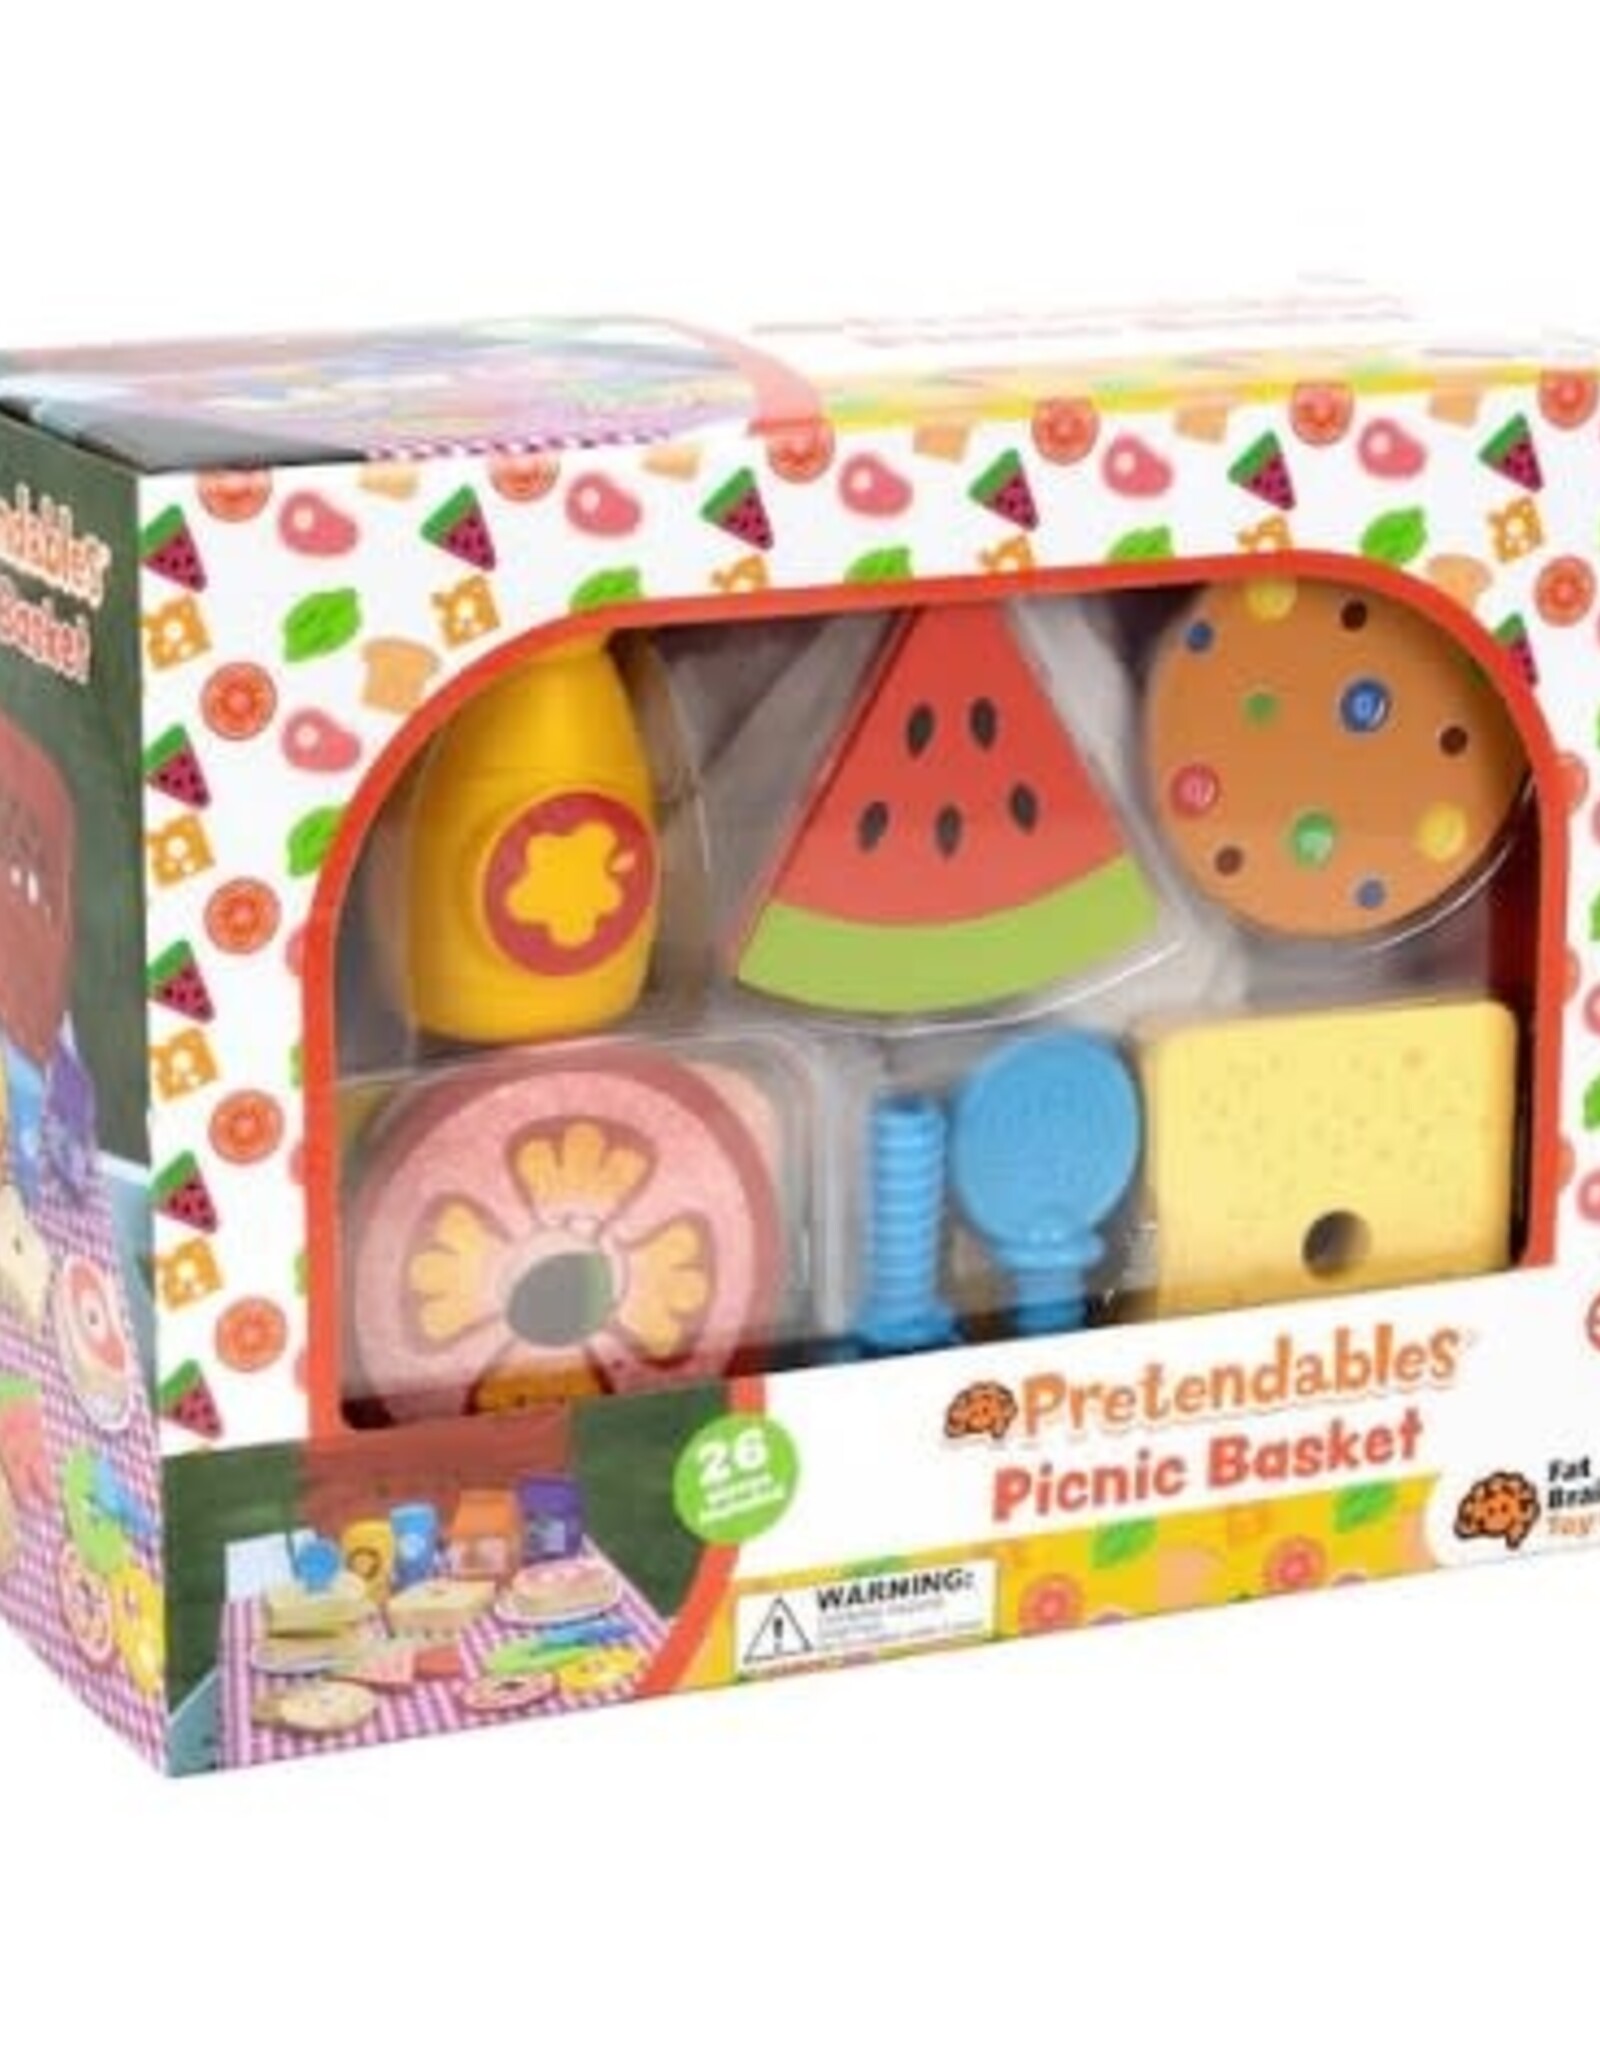 Fat Brain Toys Pretendables Picnic Basket